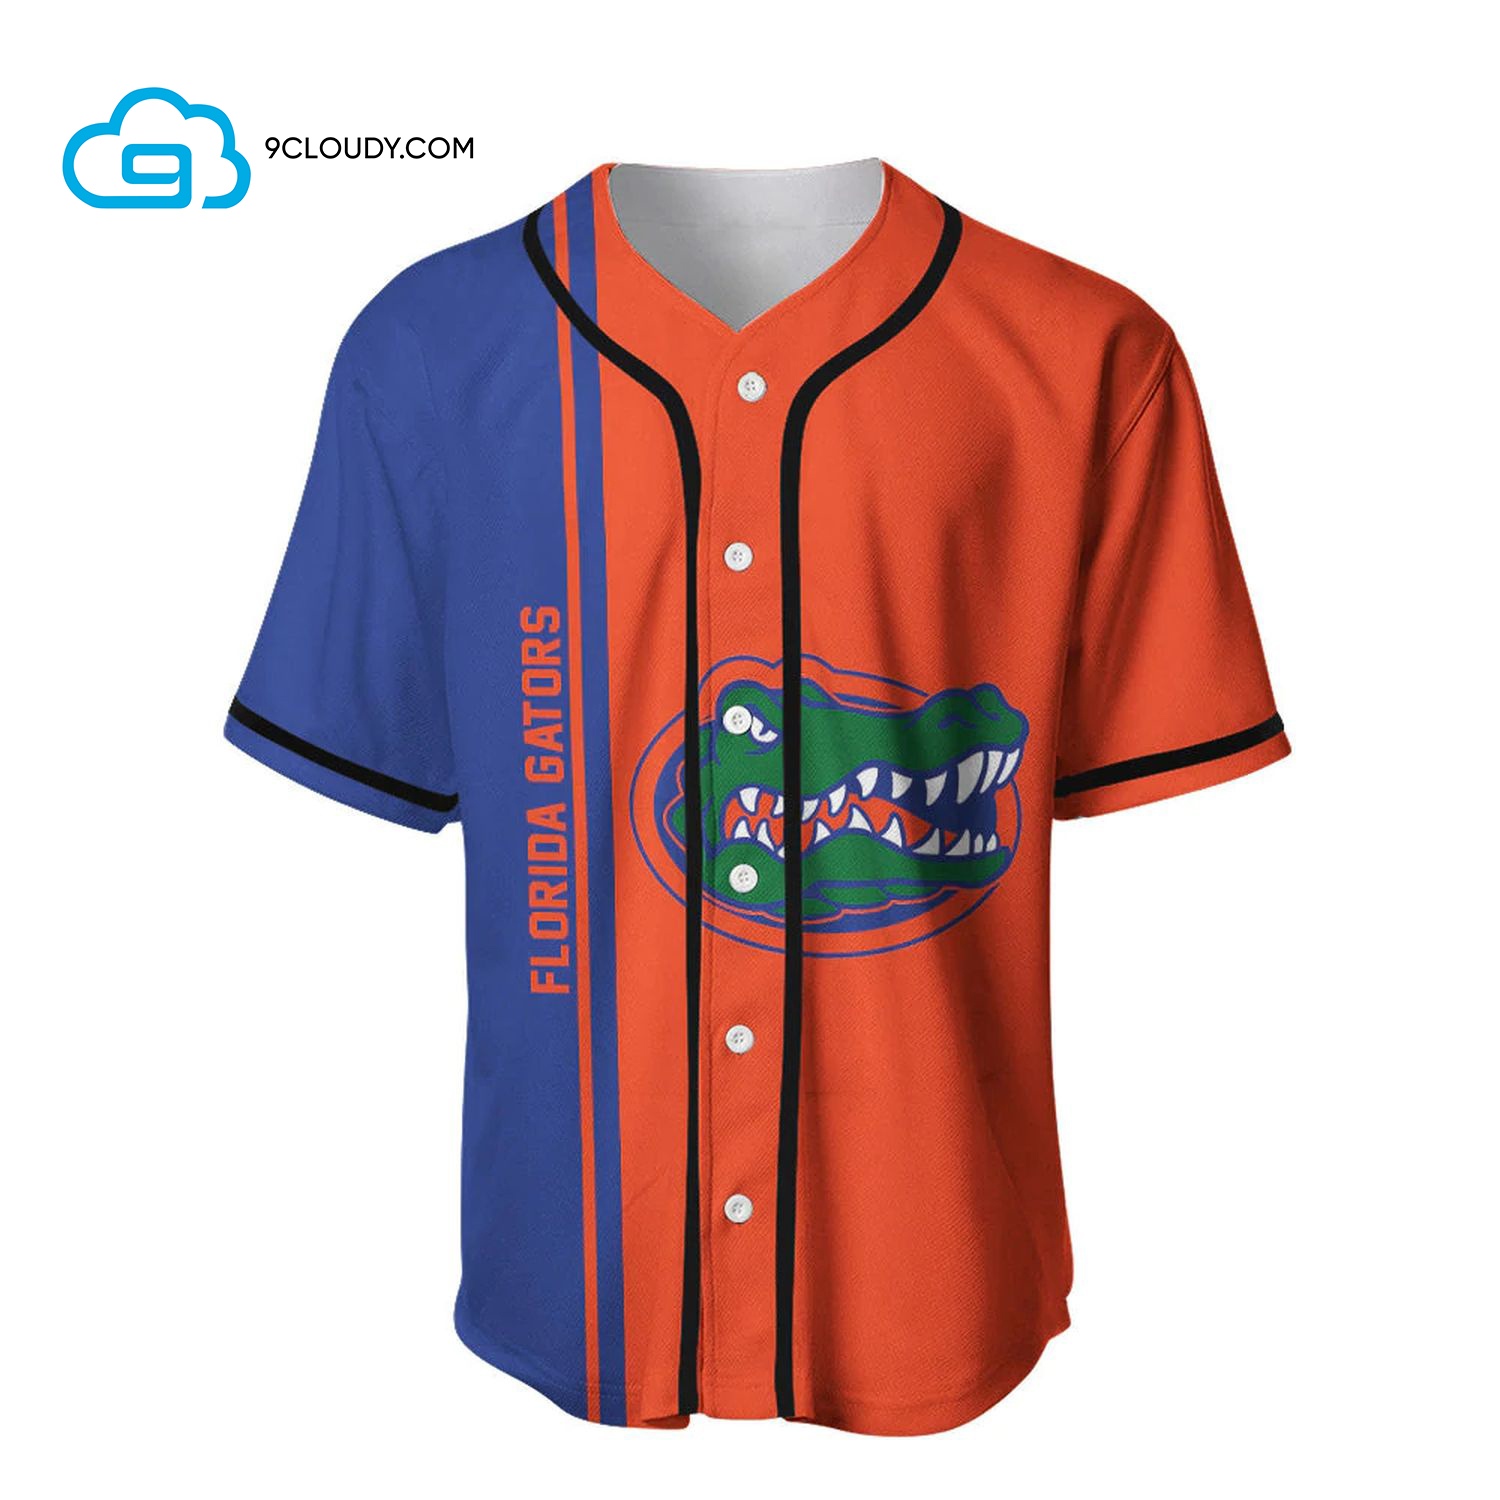 Florida Gators Full Printing Baseball Jersey